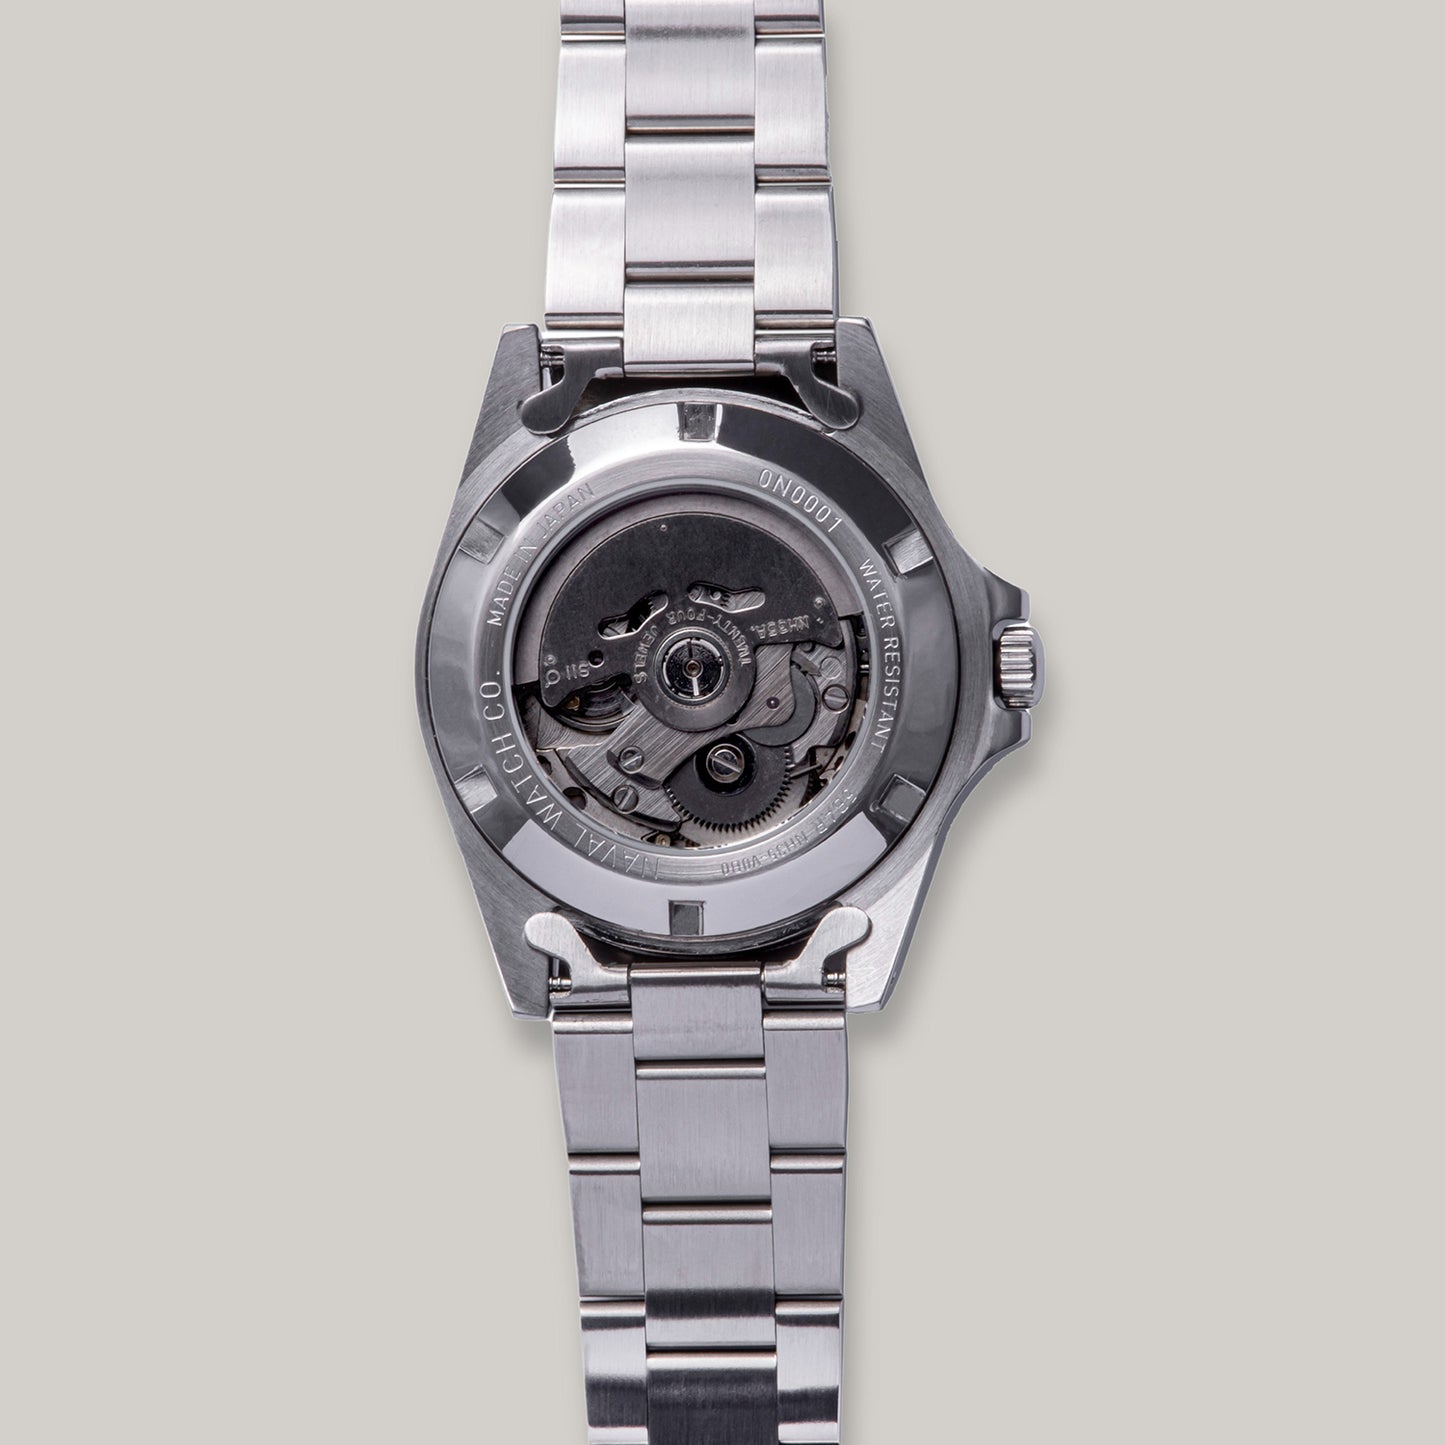 Naval Watch Co. FRXA001 Automatic Watch - Black